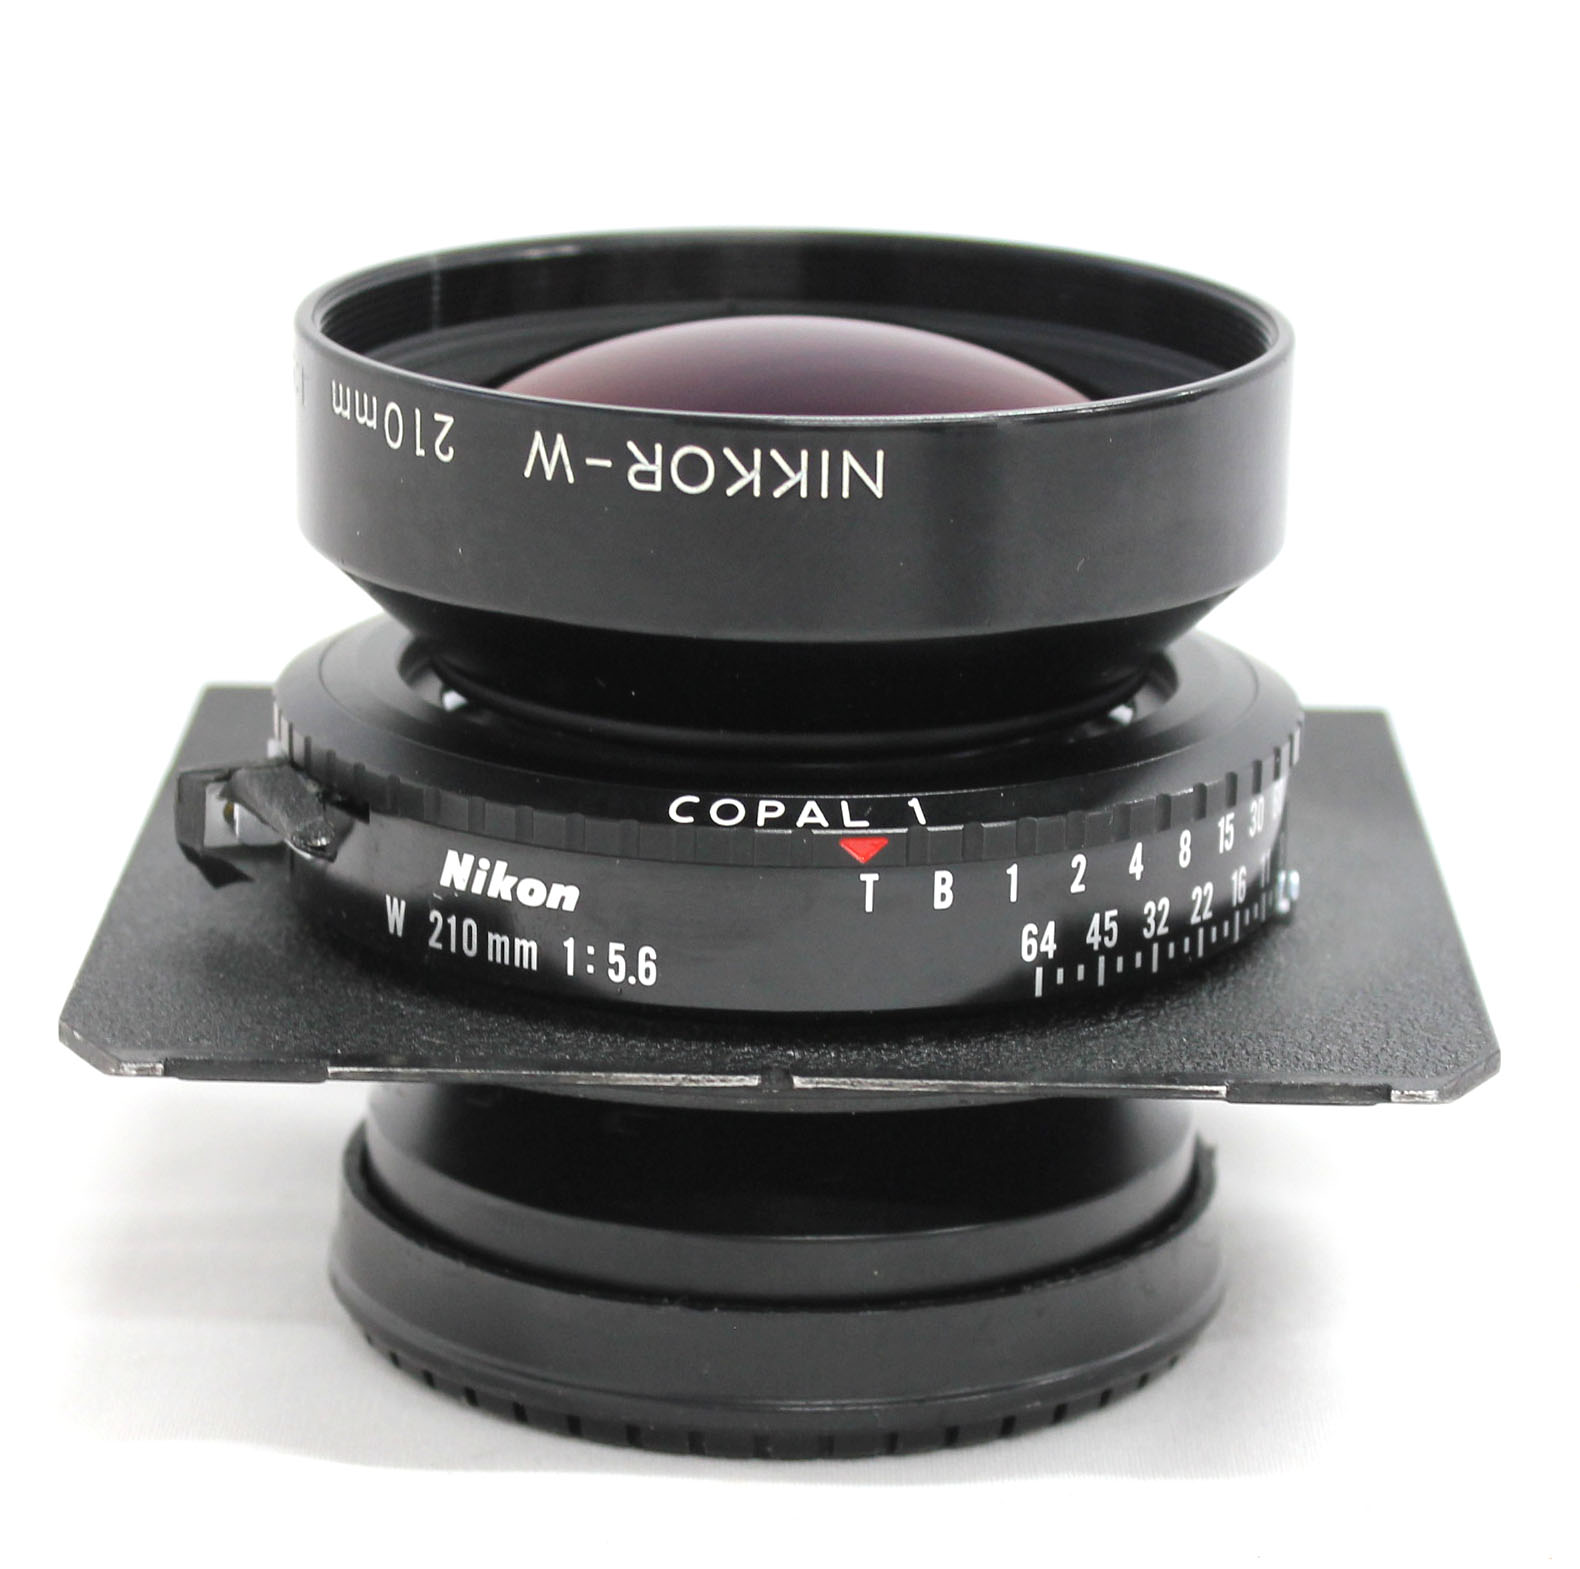 Nikon Nikkor W 210mm F/5.6 4x5 Large Format Lens with Copal 1 Shutter Linhof Board from Japan Photo 5